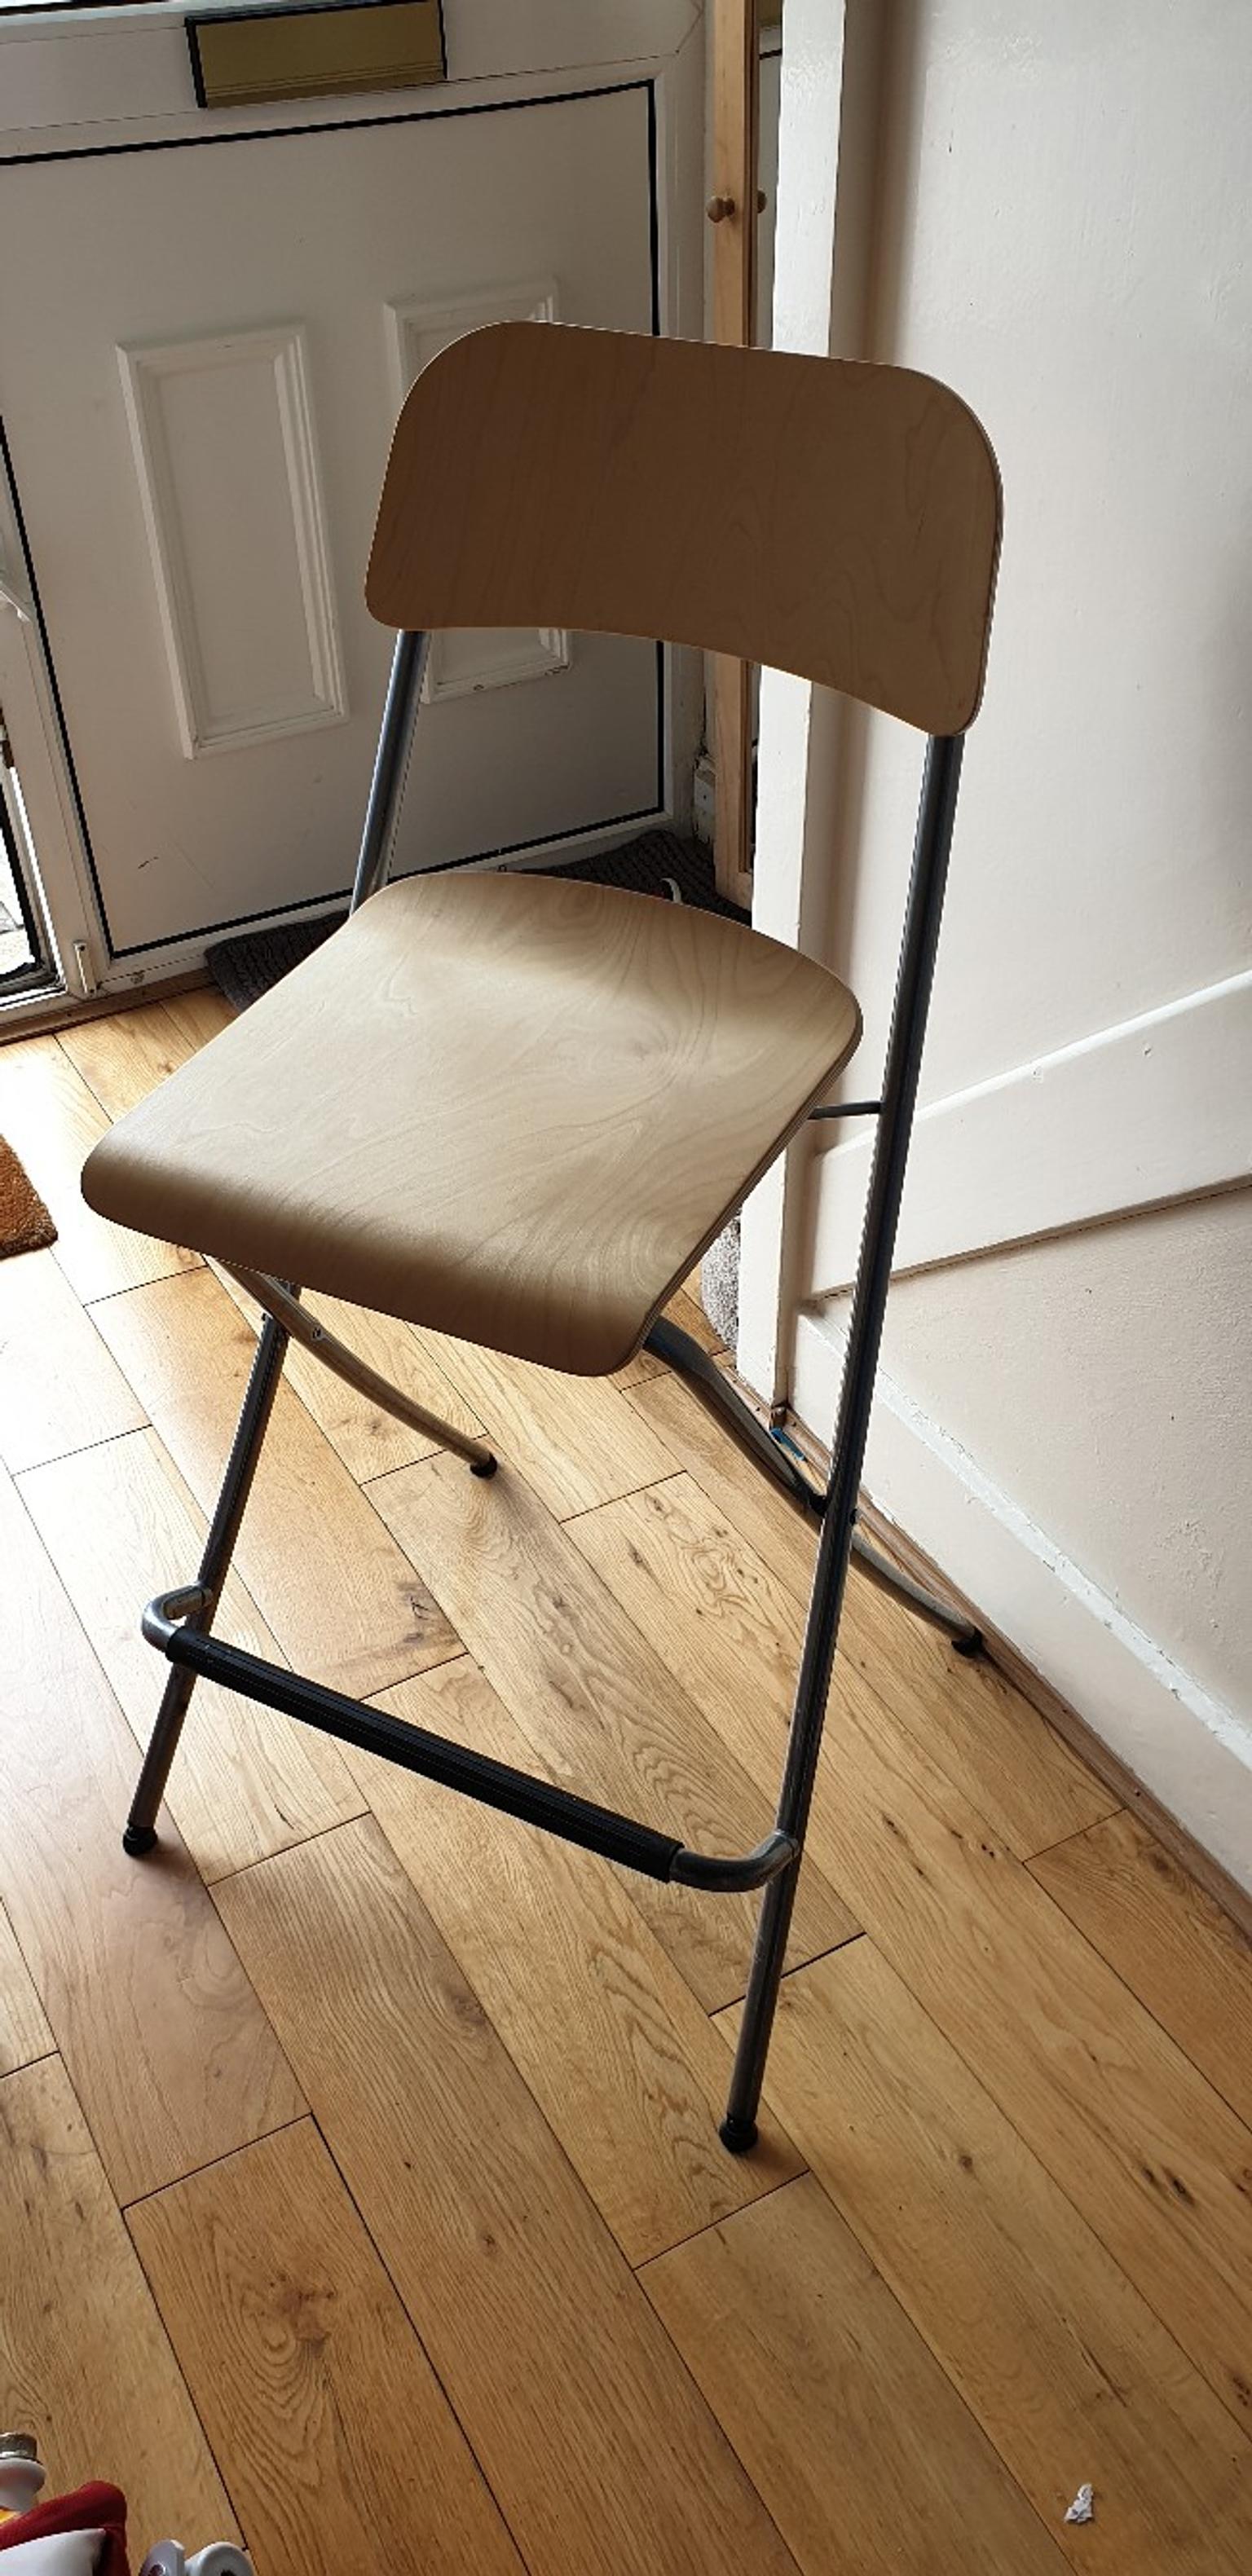 Ikea Folding Bar Stool With Backrest In, Foldaway Breakfast Bar Stools